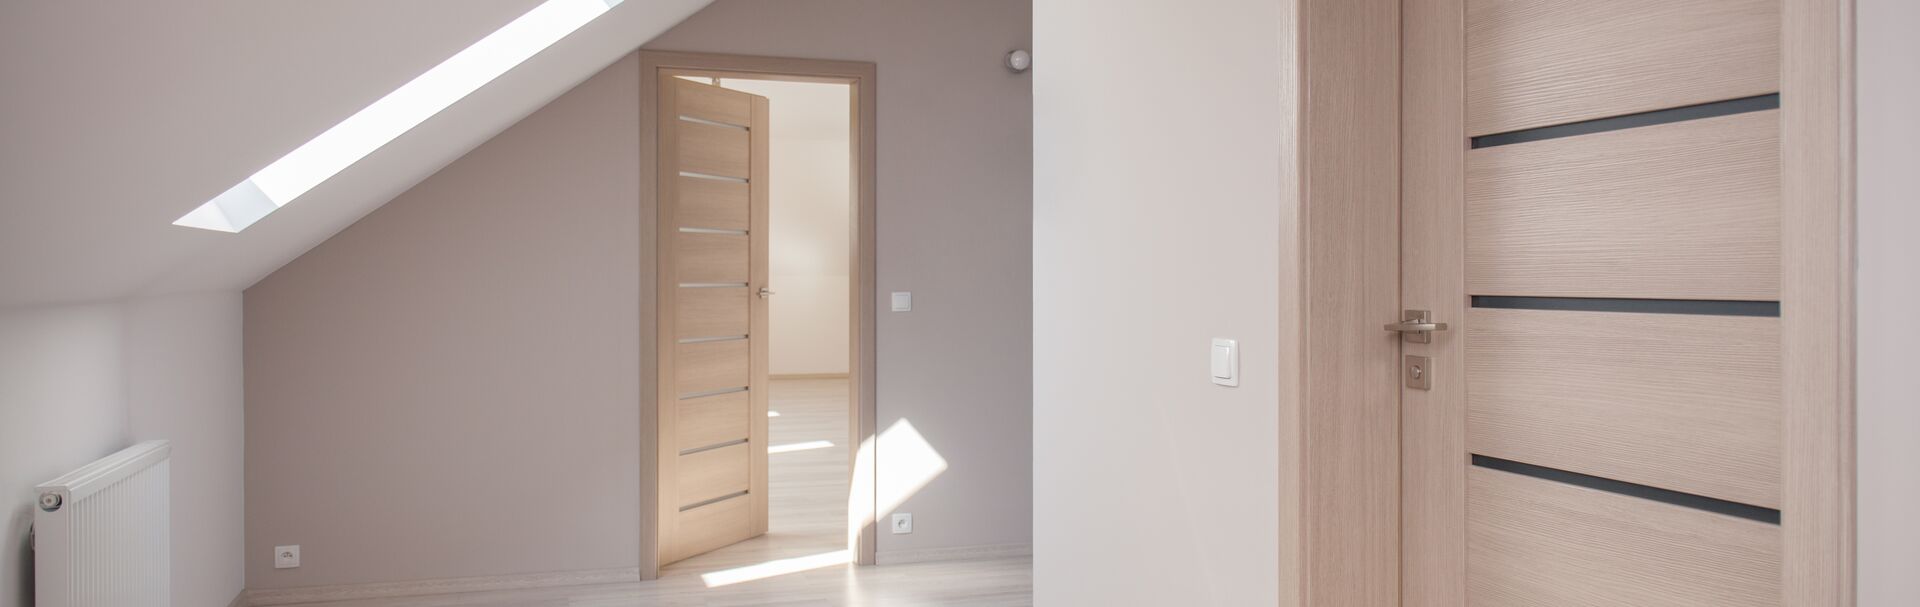 Innentüren -  Zimmertüren: Holztüren & Kunststofftüren